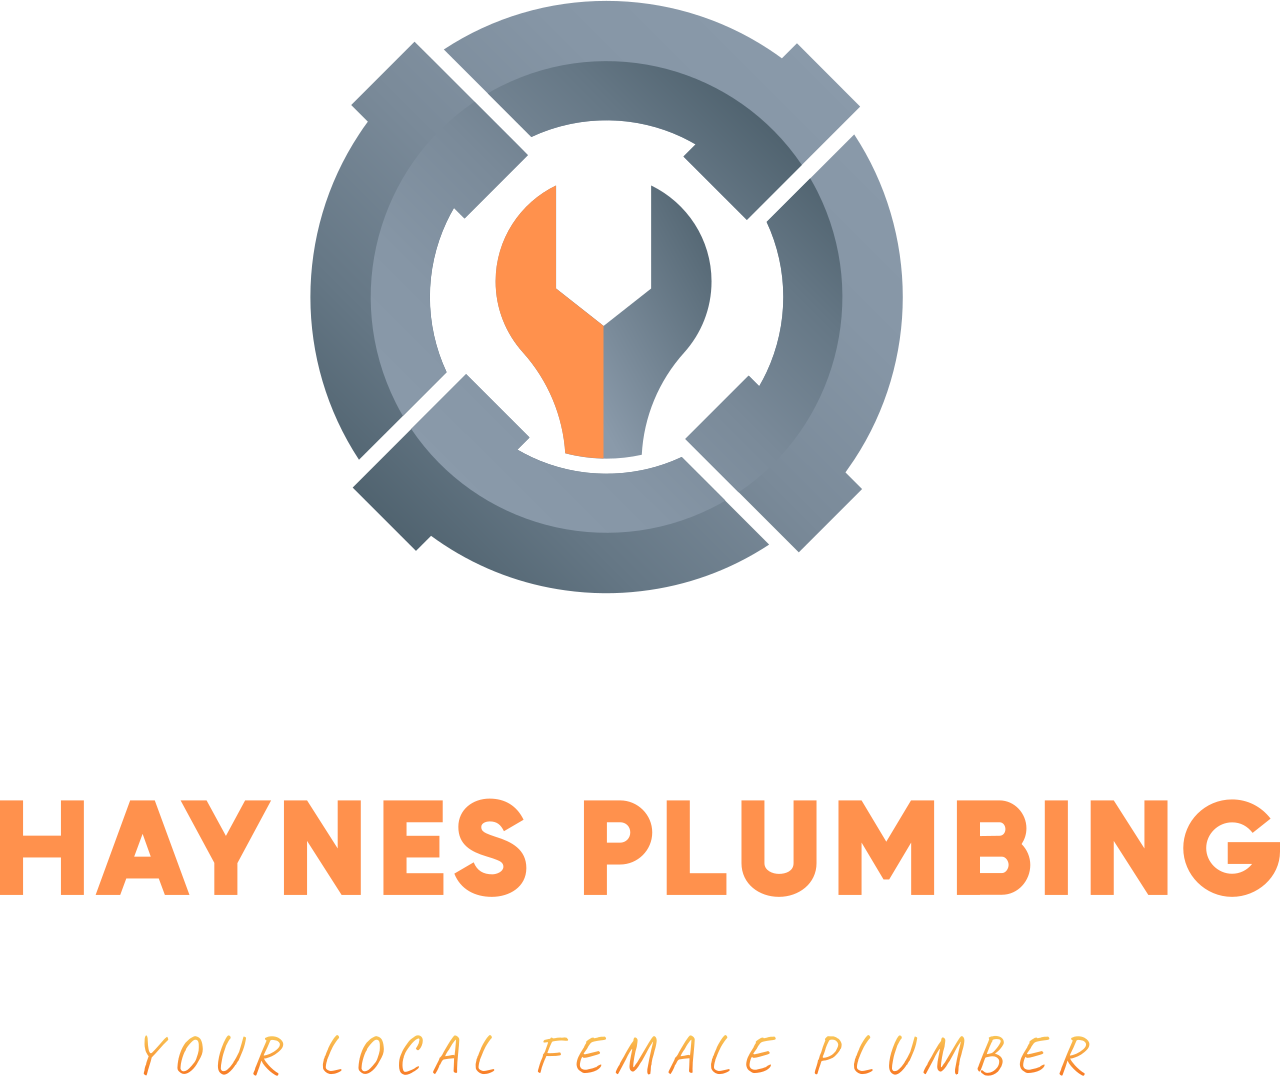 Haynes plumbing's logo